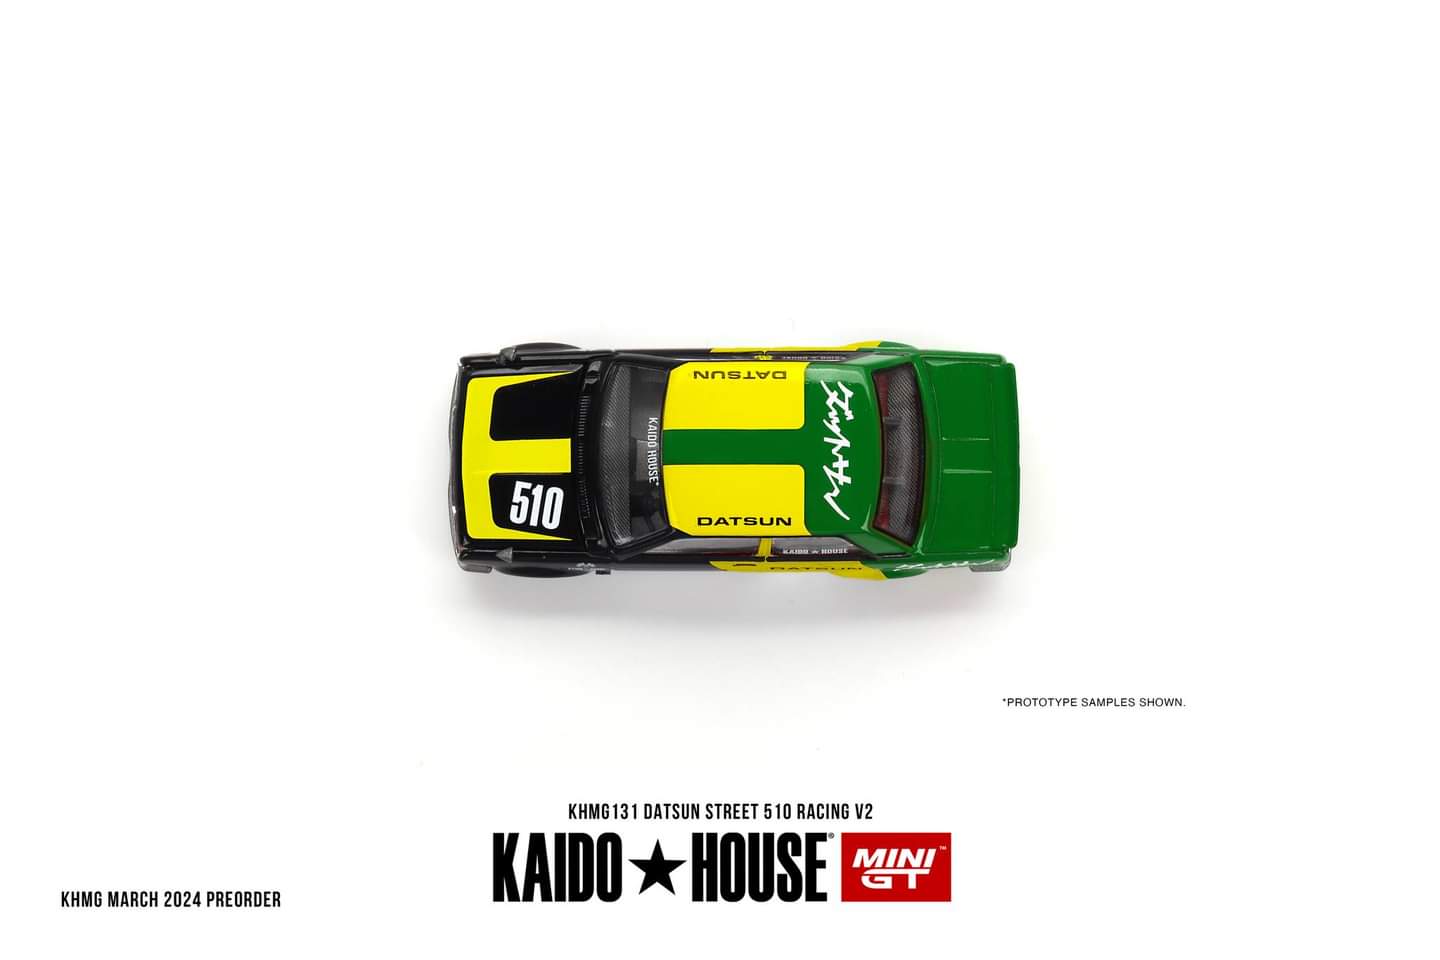 (PRE-ORDER) Kaido House
Datsun Street 510 Racing V2